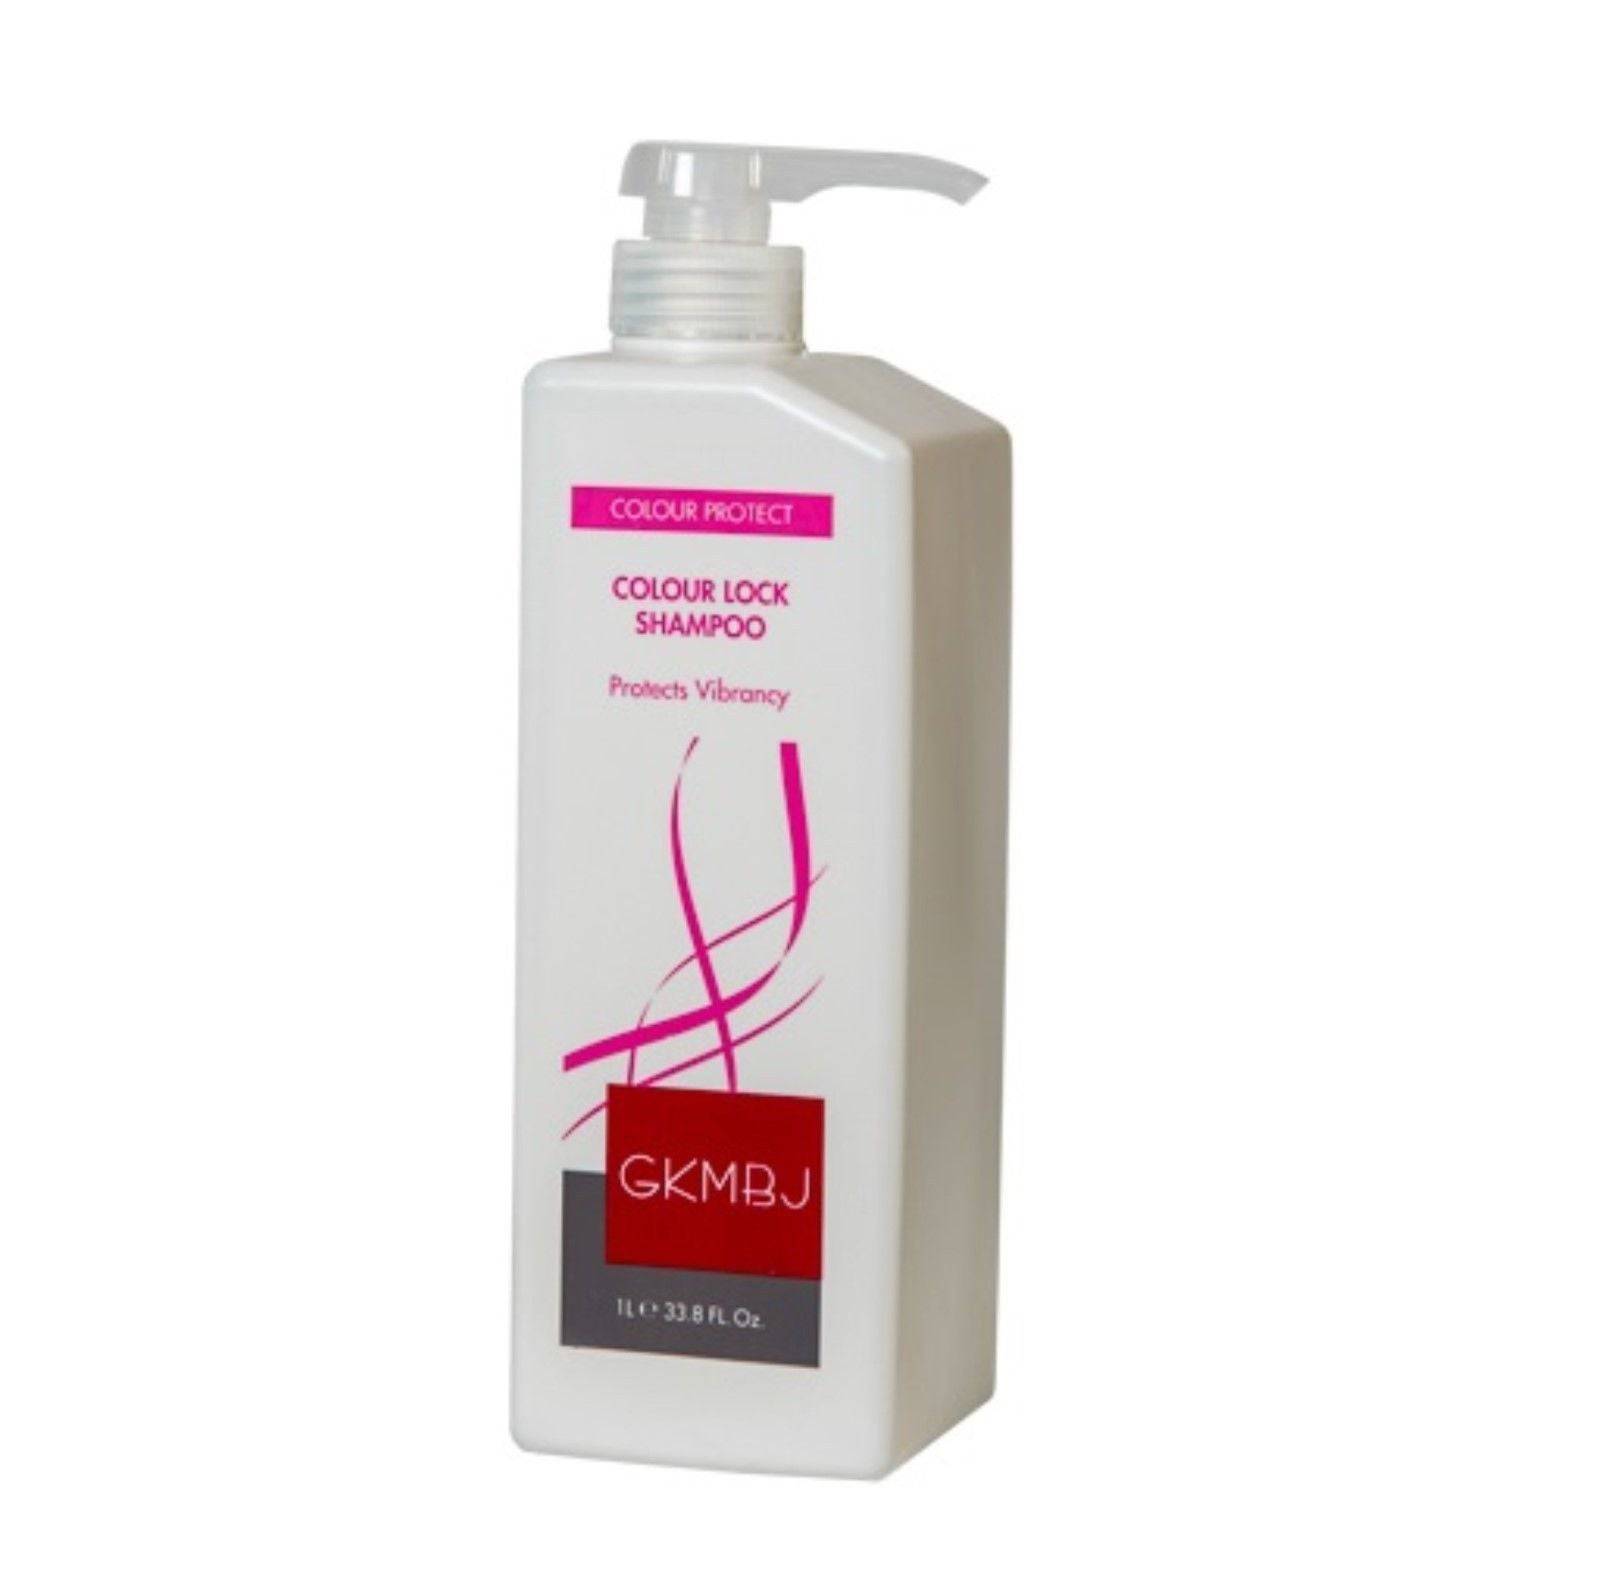 GKMBJ Colour Lock Shampoo 1000ml Protects Vibrancy - On Line Hair Depot